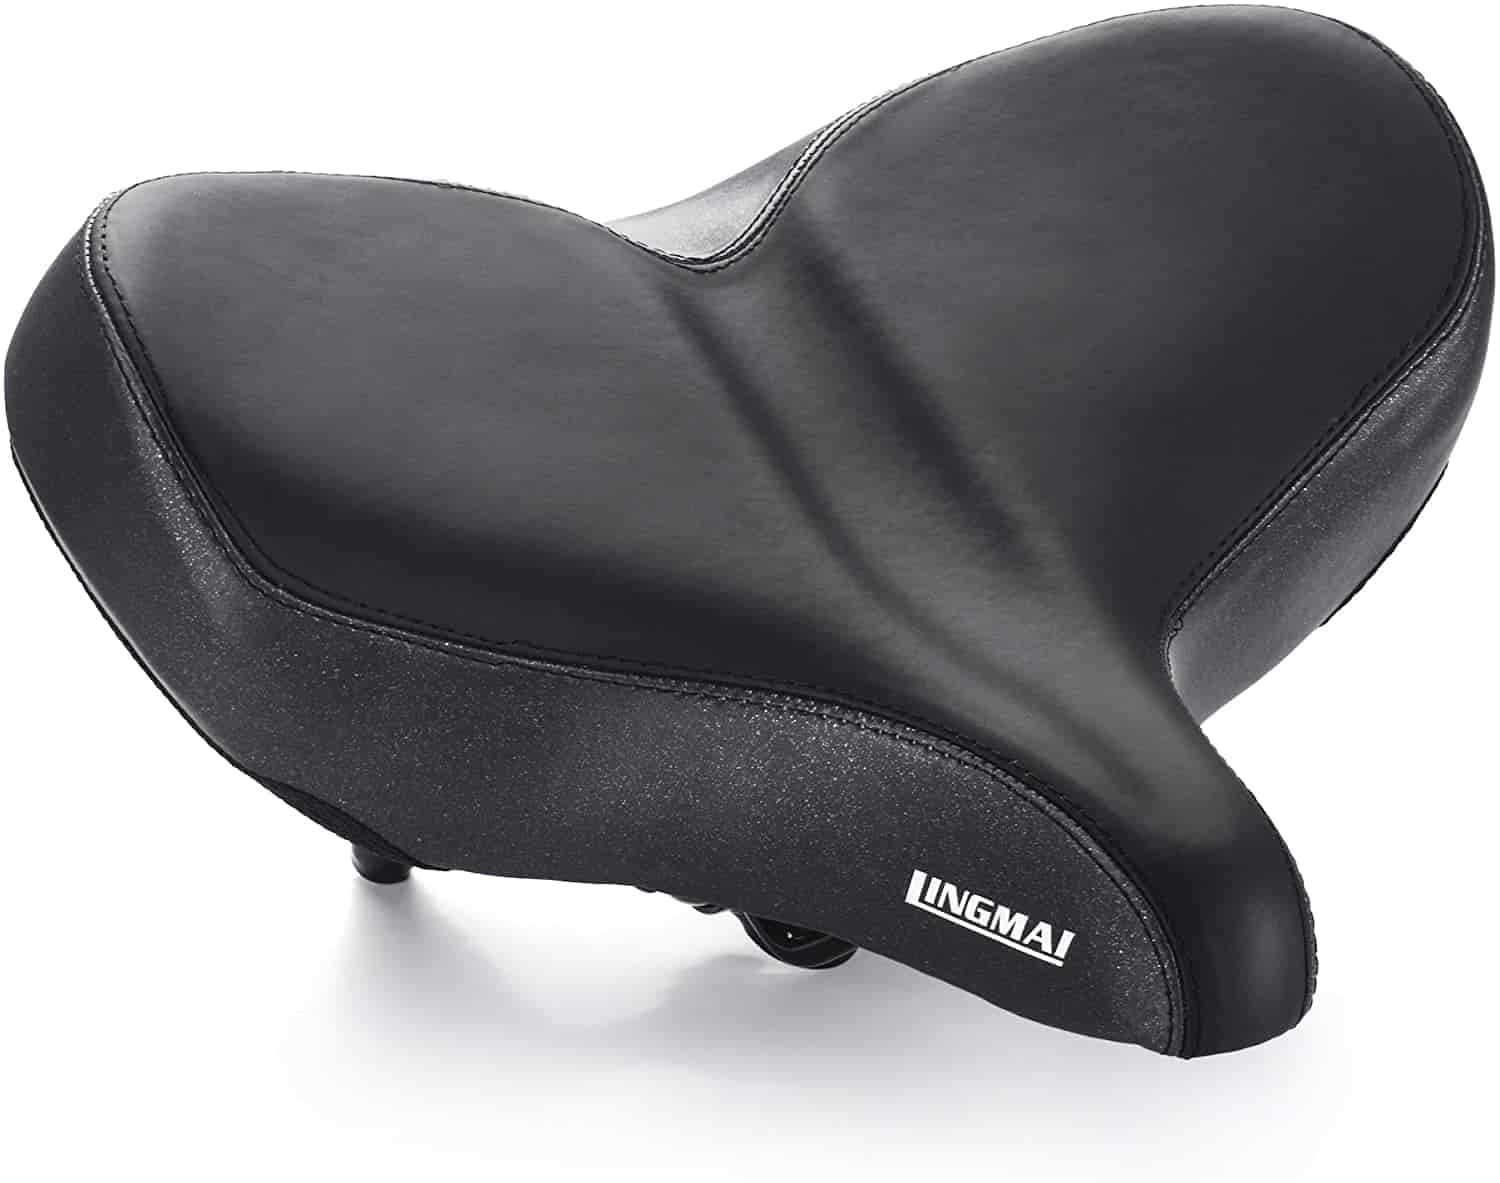 LINGMAI Comfortable Exercise Bike Seat